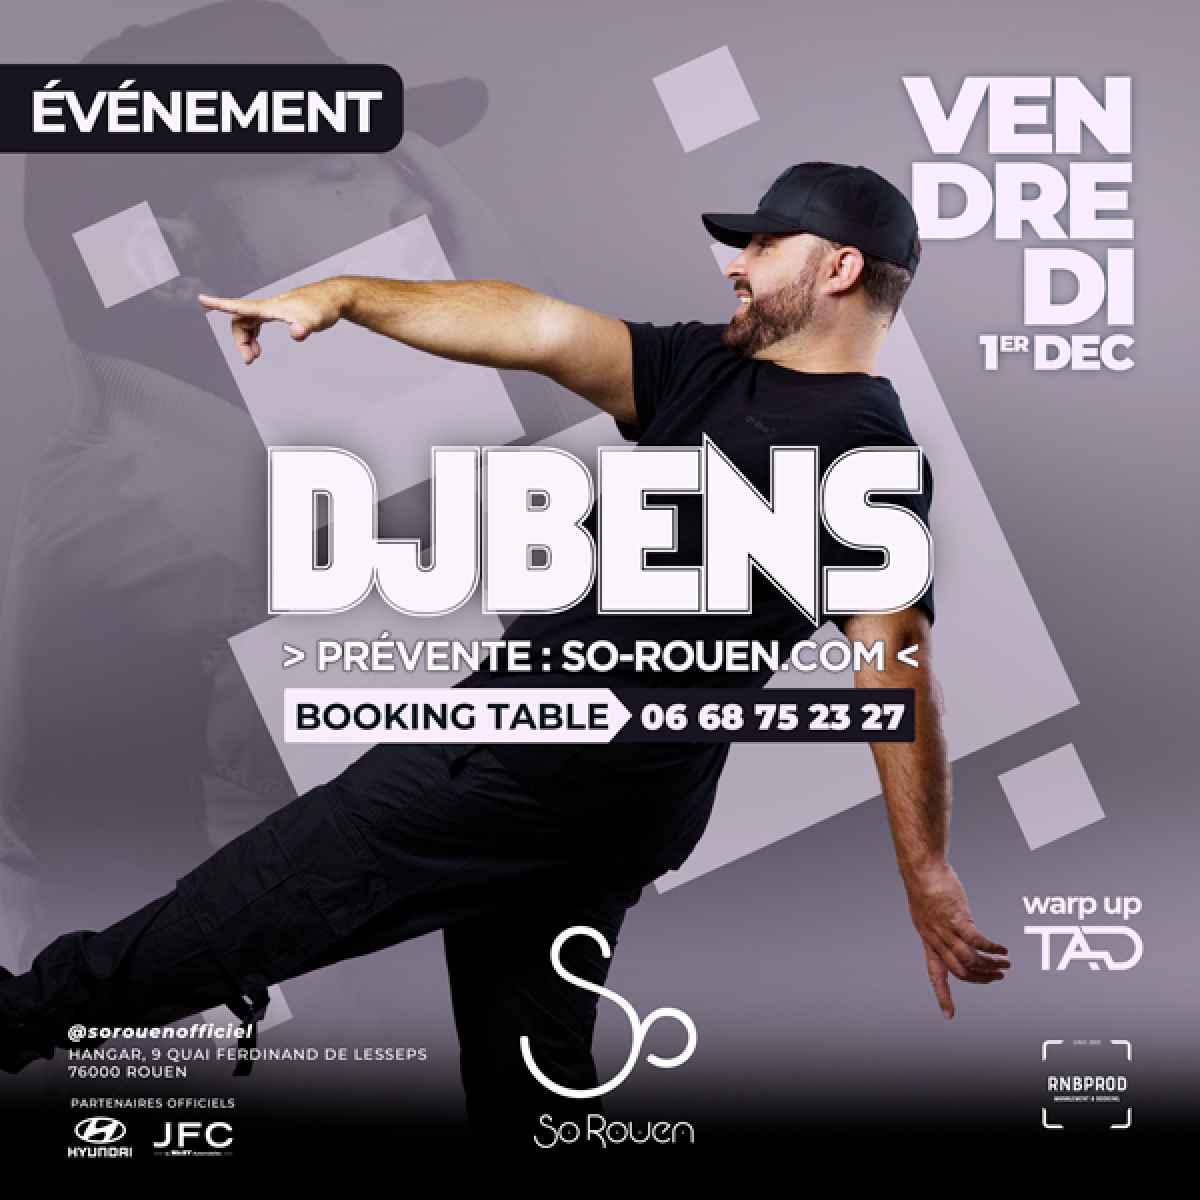 DJ BENS - So Rouen